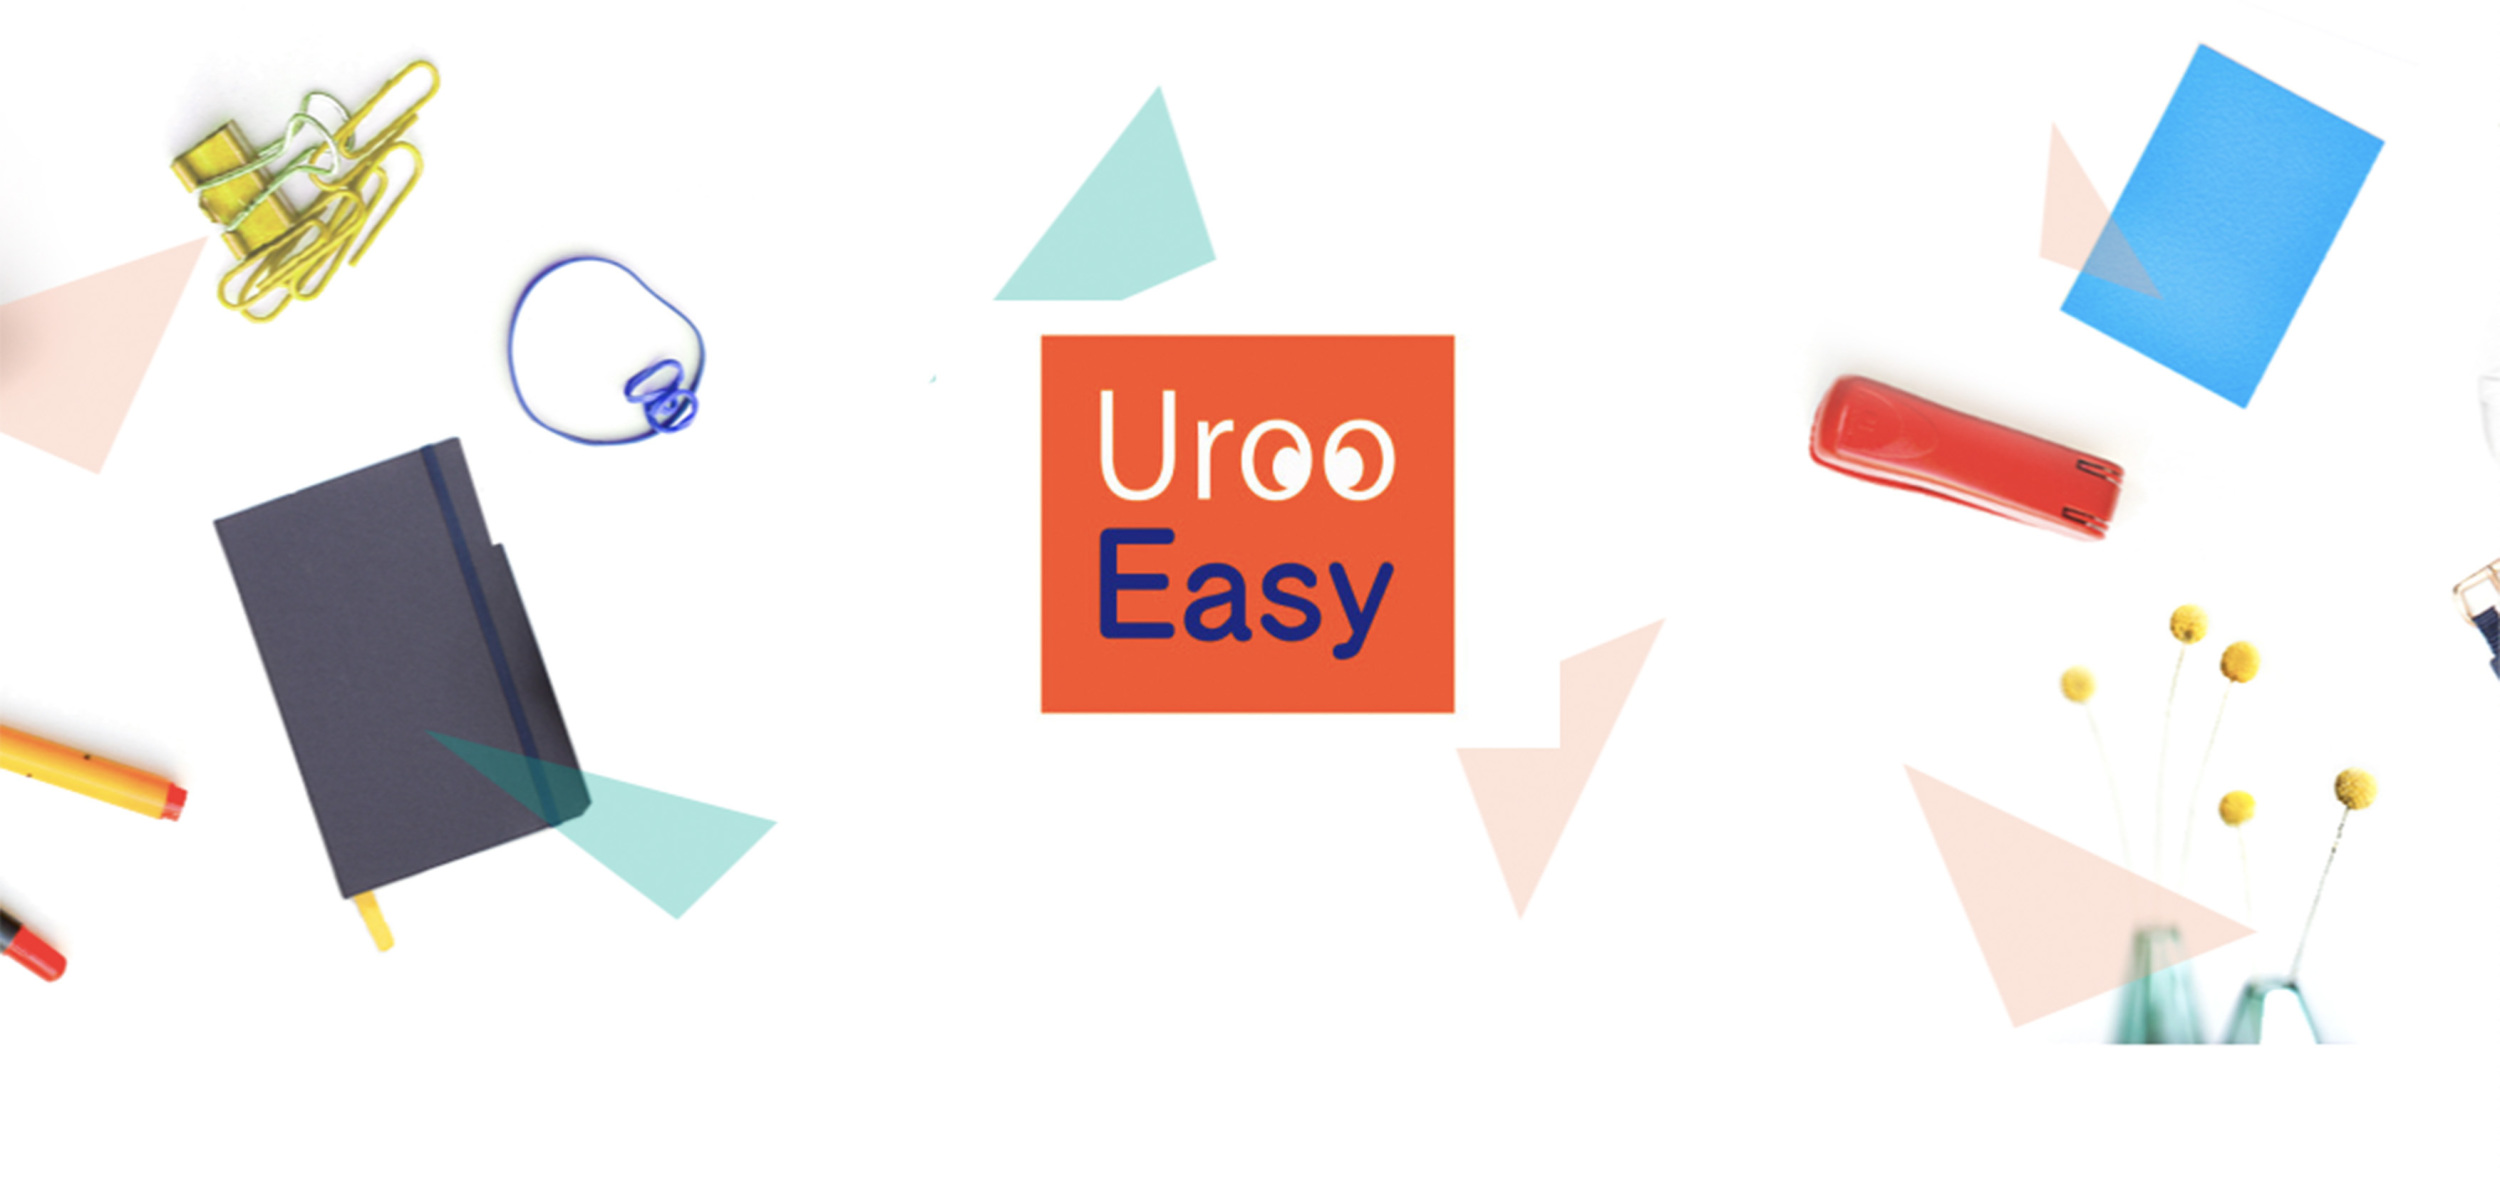 Uroo Easy｜ツケ払い(後払い)現金化サービスの評判や特徴を詳しくご紹介